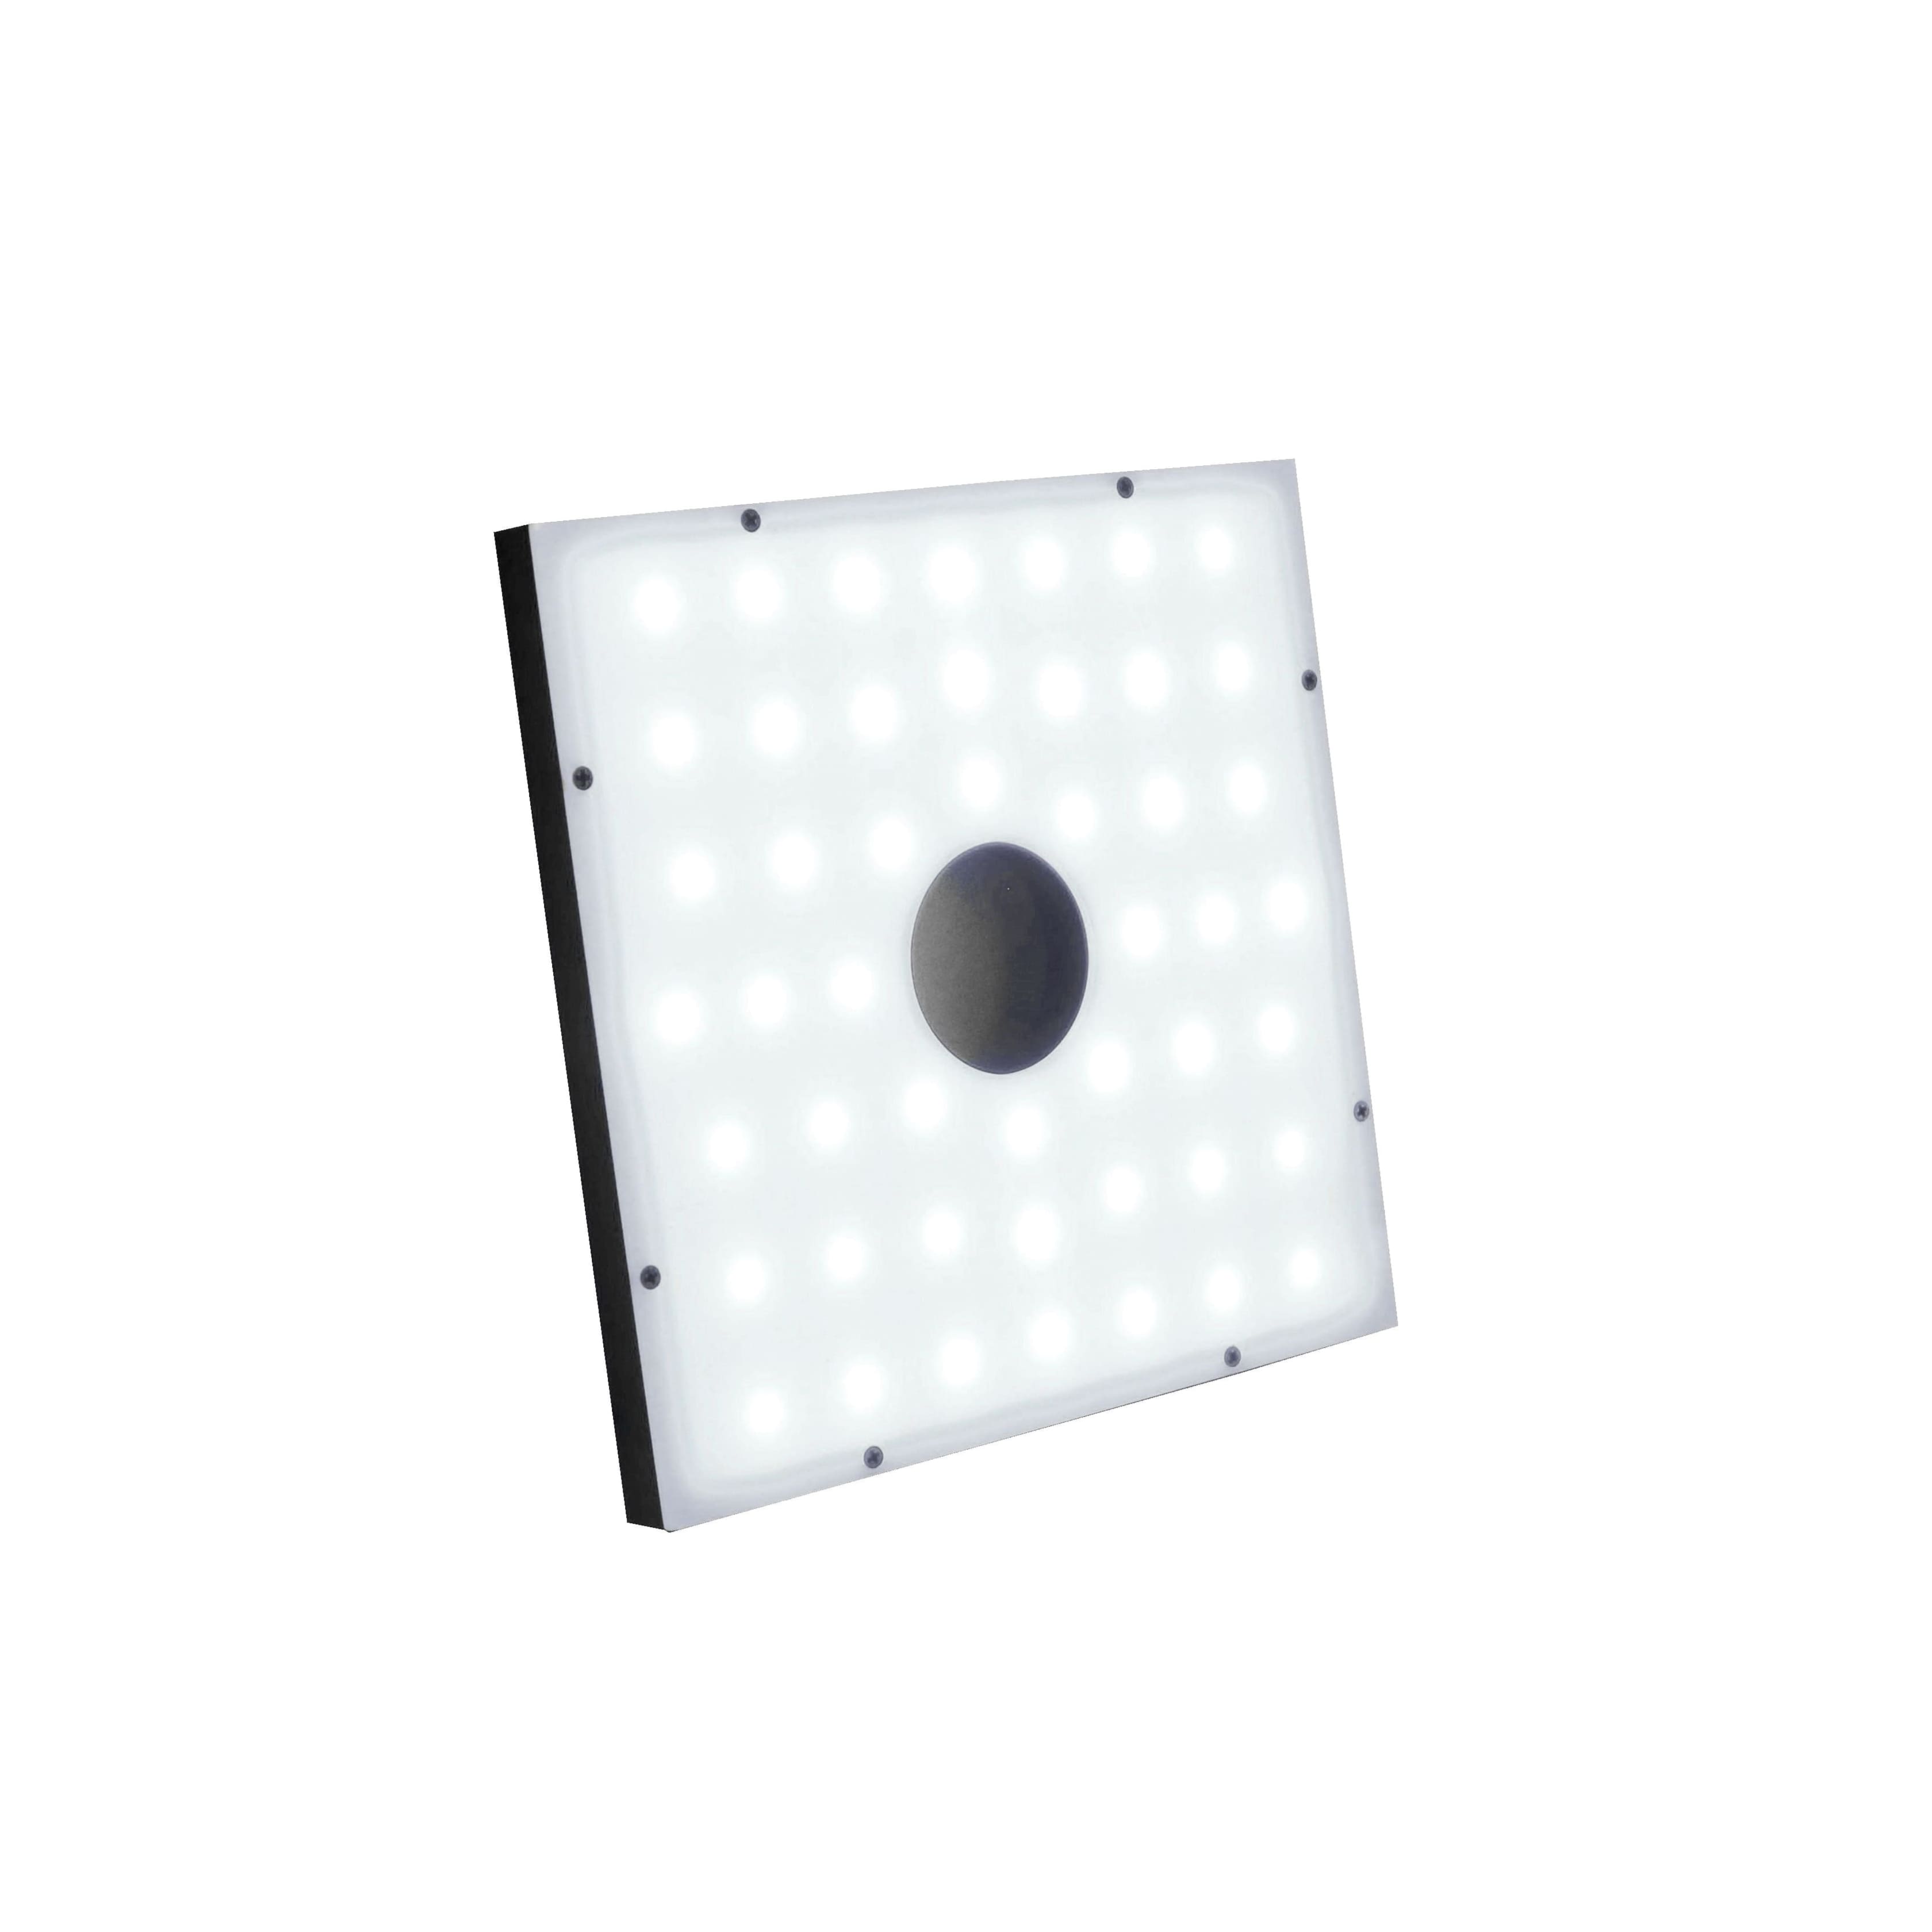 DSQ2-300/300 Diffused Square Panel Lights – White